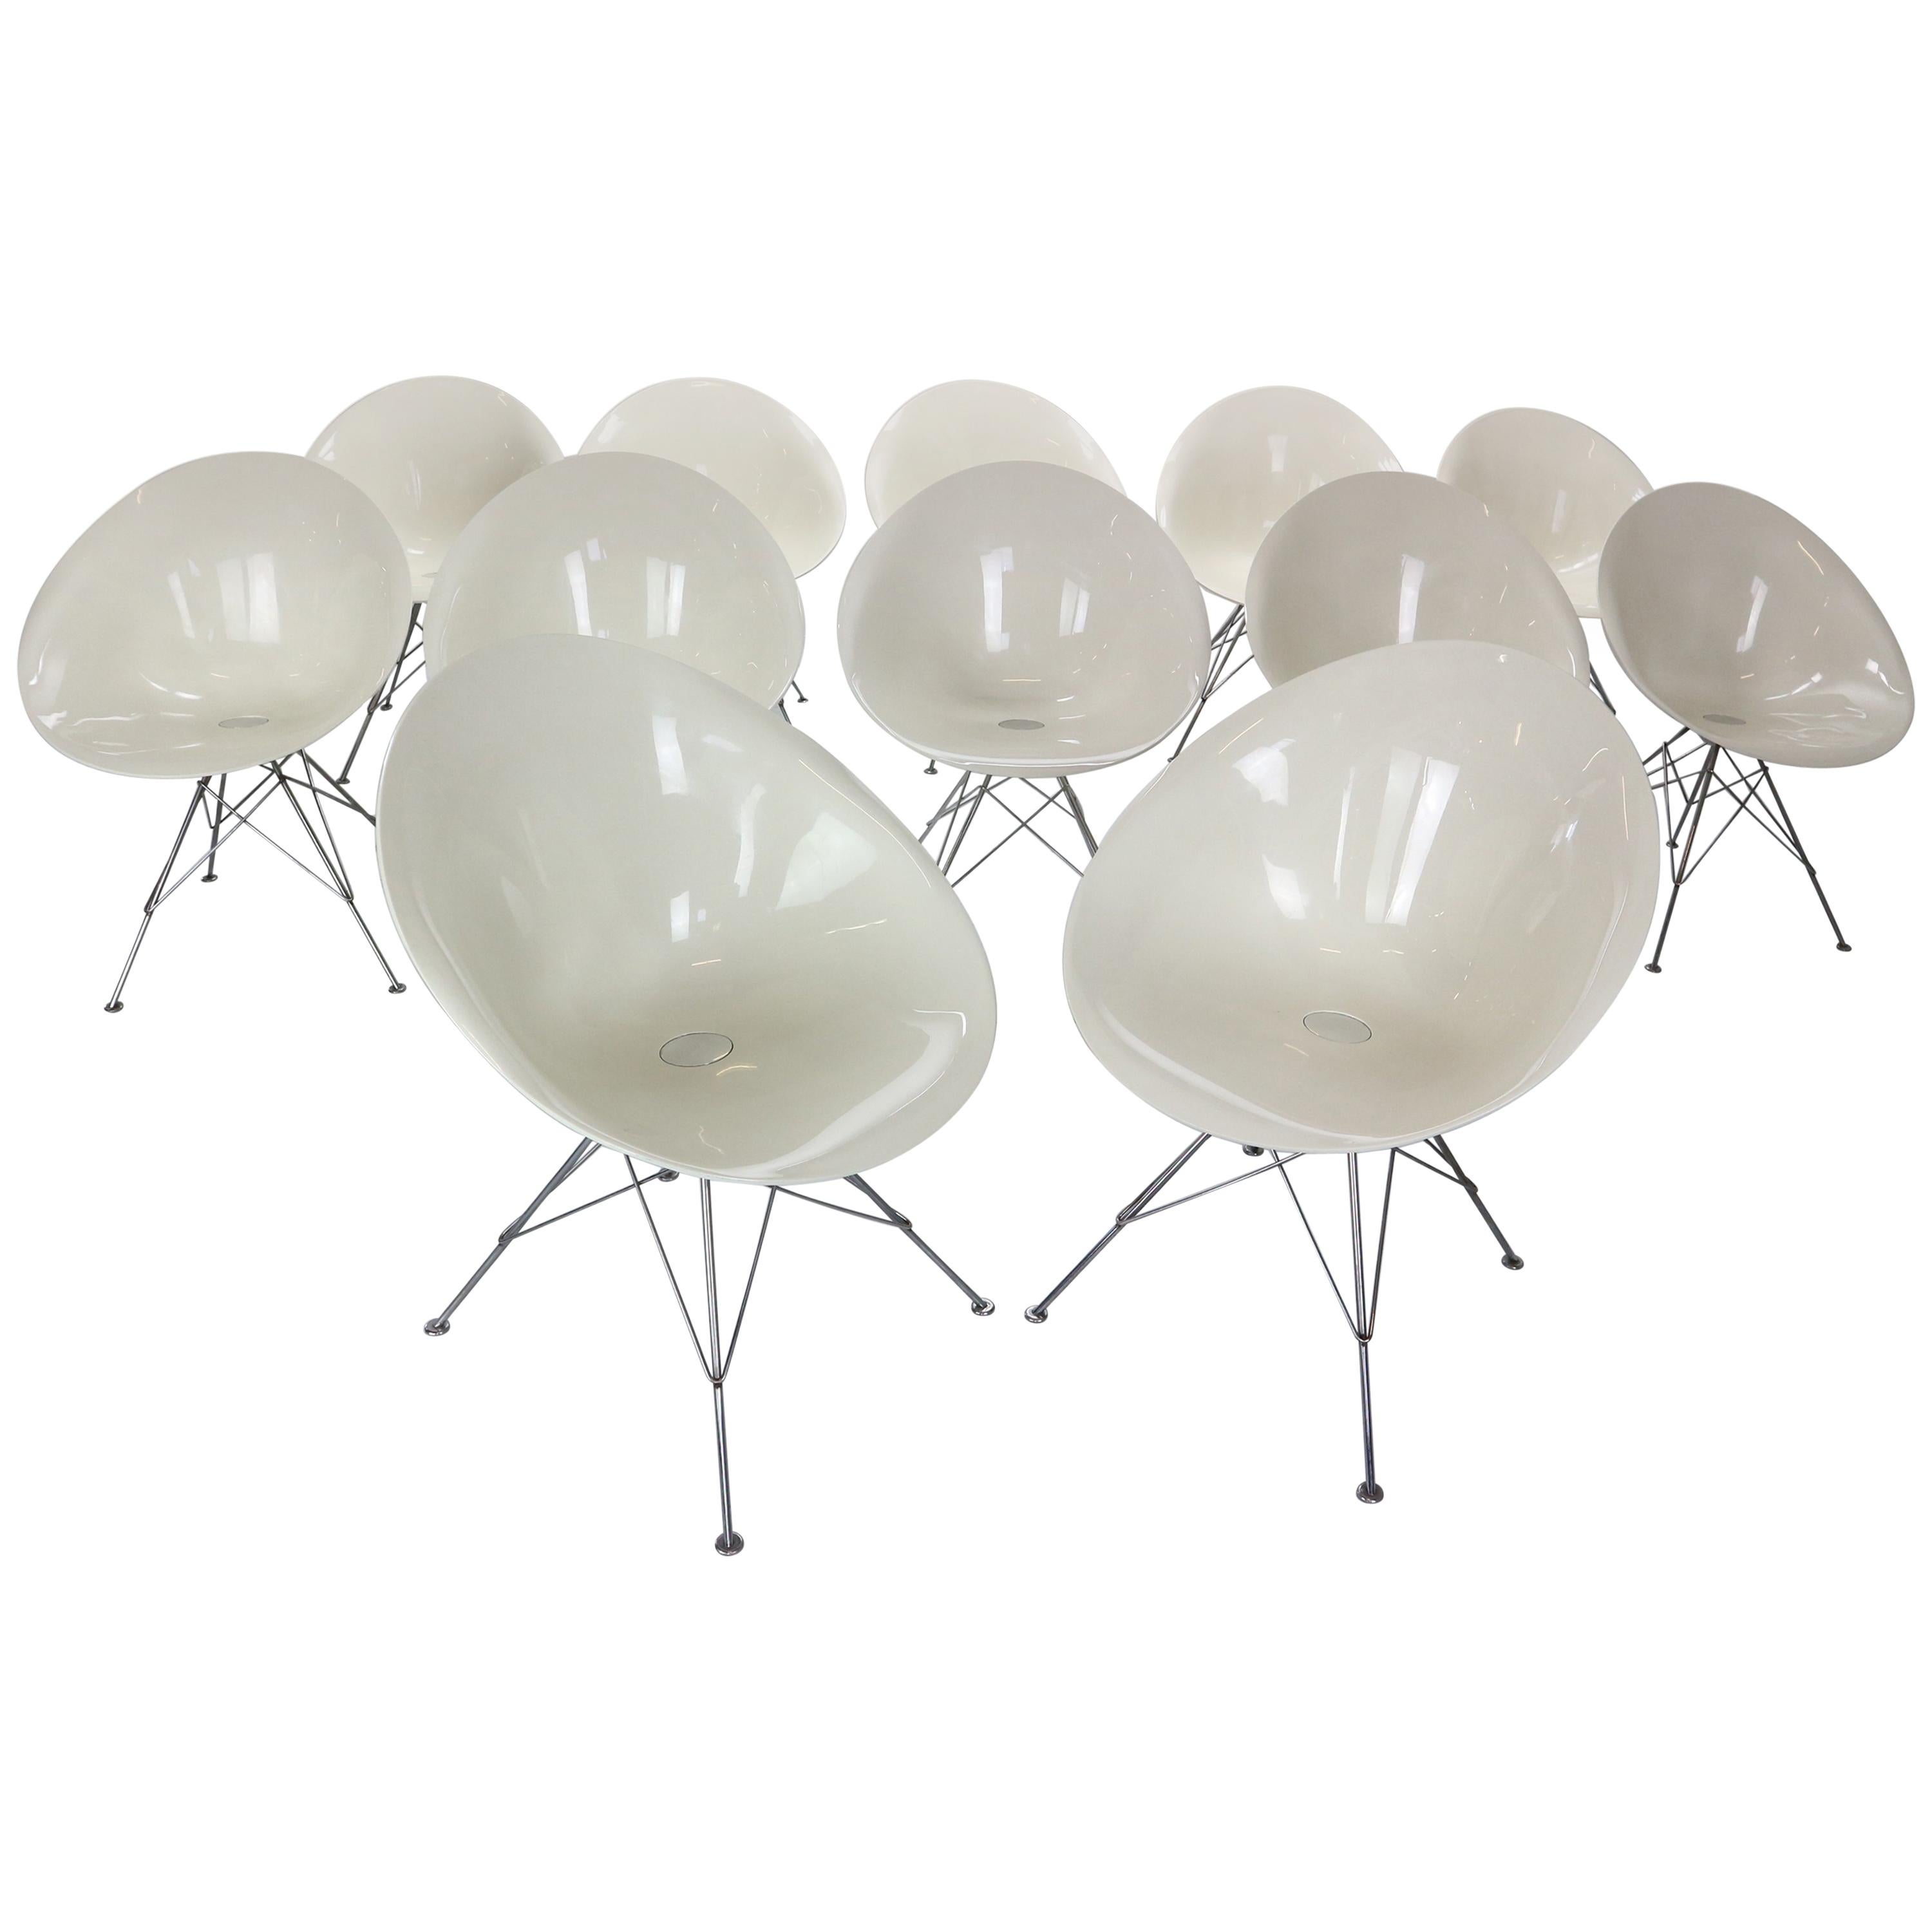 Philippe Starck for Kartell White Lucite "Eros" Italian Chairs, Quantity 6